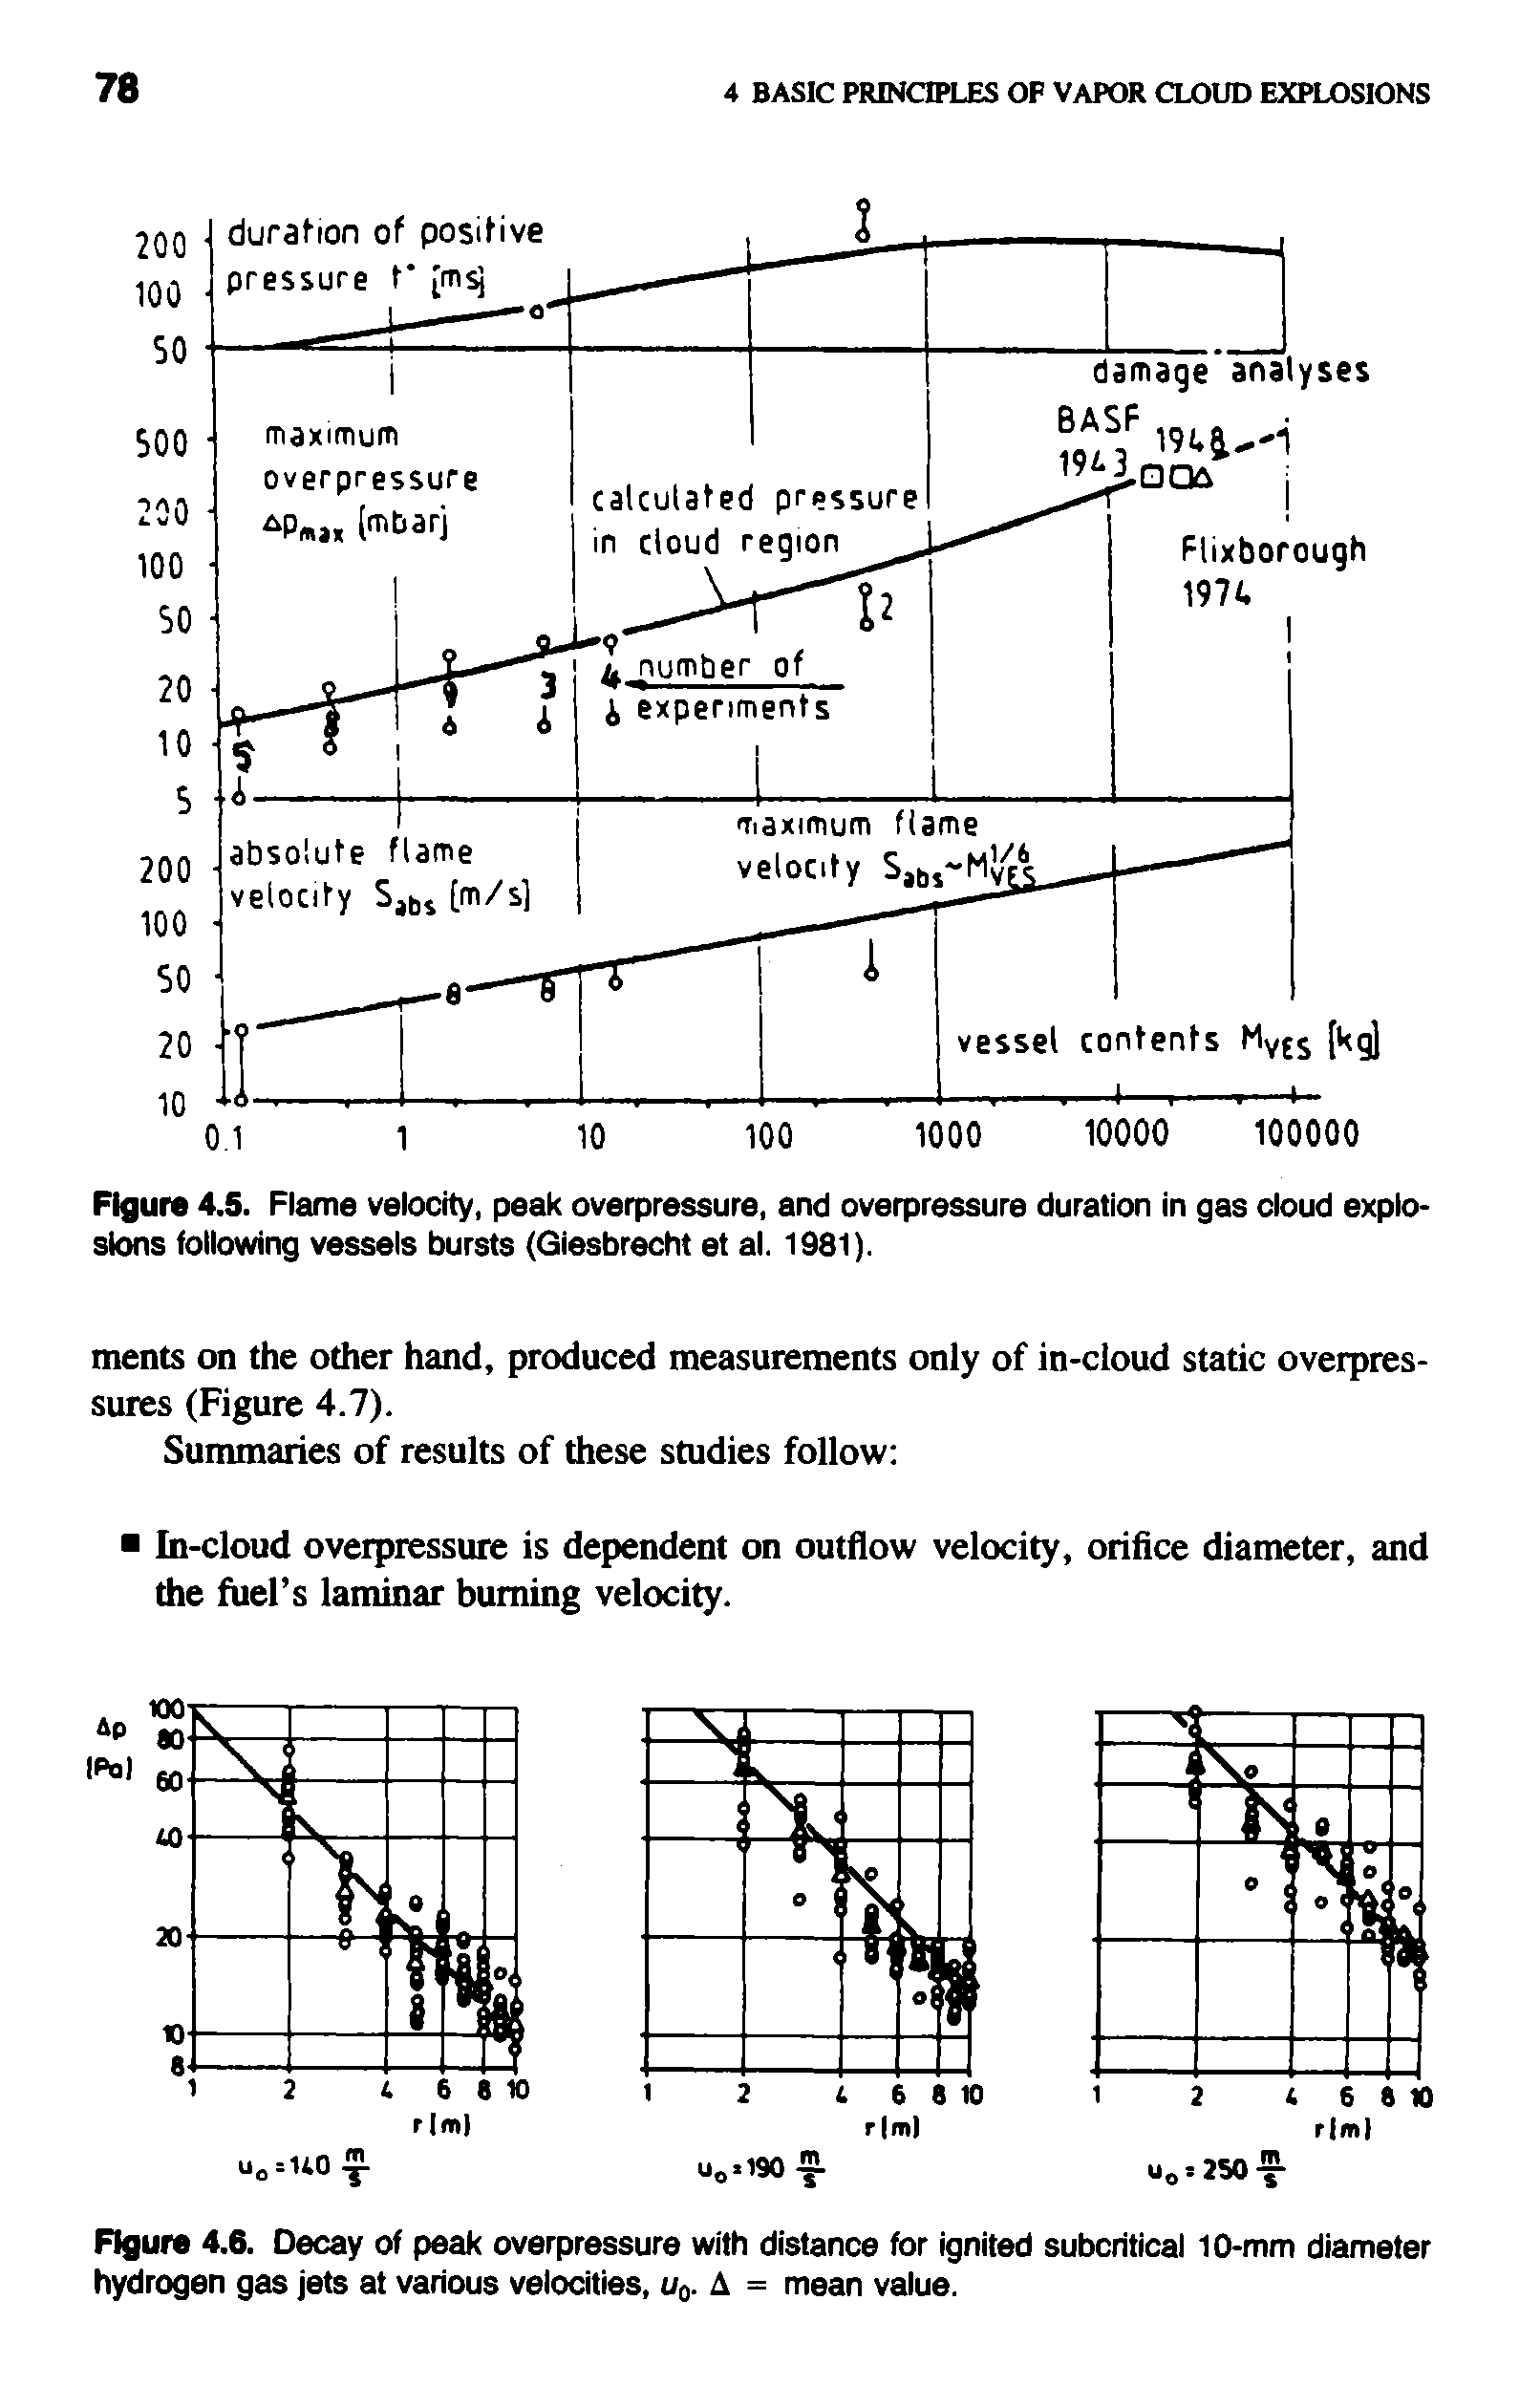 Figure 4.5. Flame velocity, peak overpressure, and overpressure duration in gas cloud explosions following vessels bursts (Giesbrecht et al. 1981).